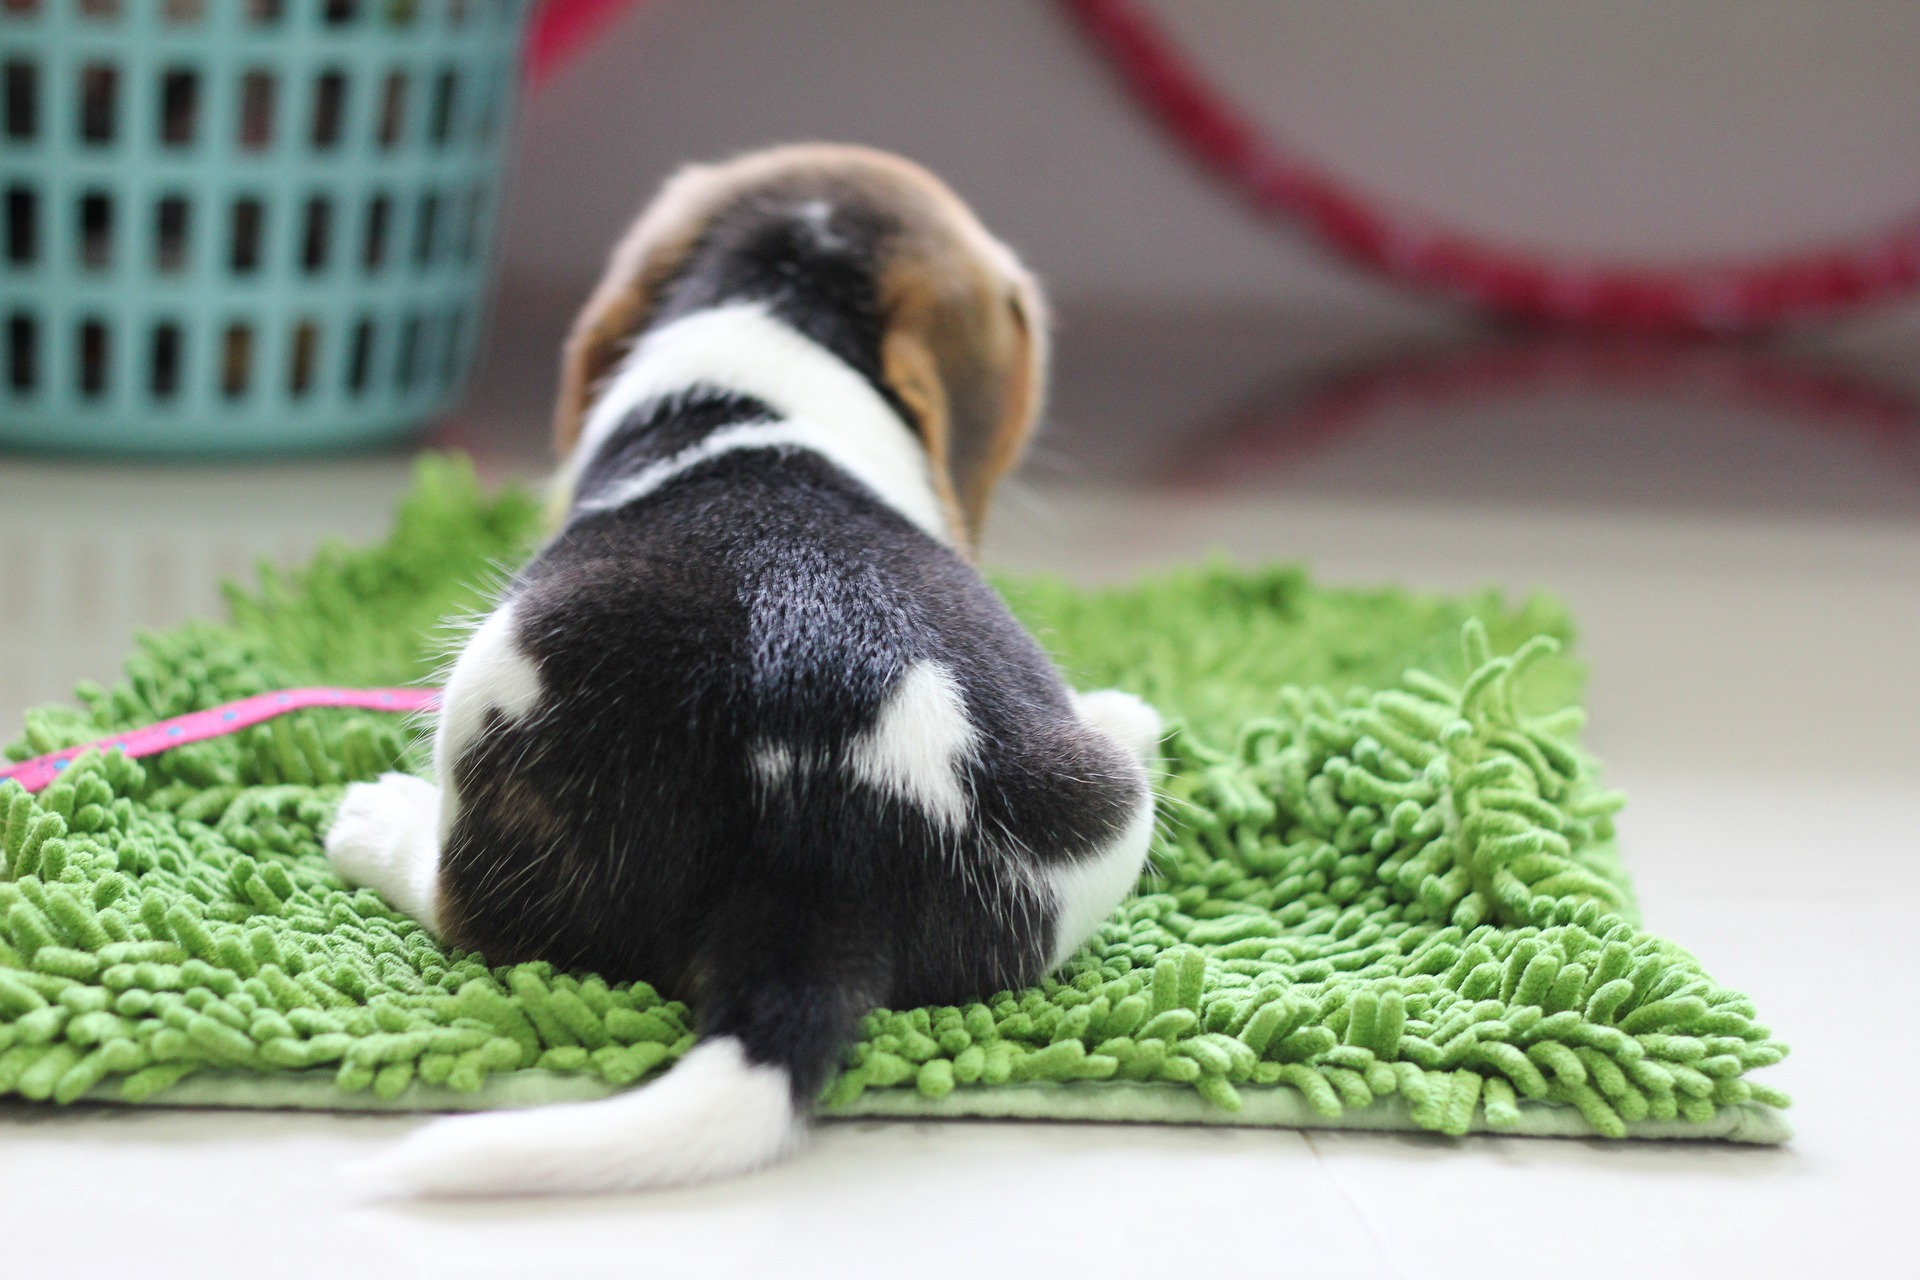 a beagle puppy